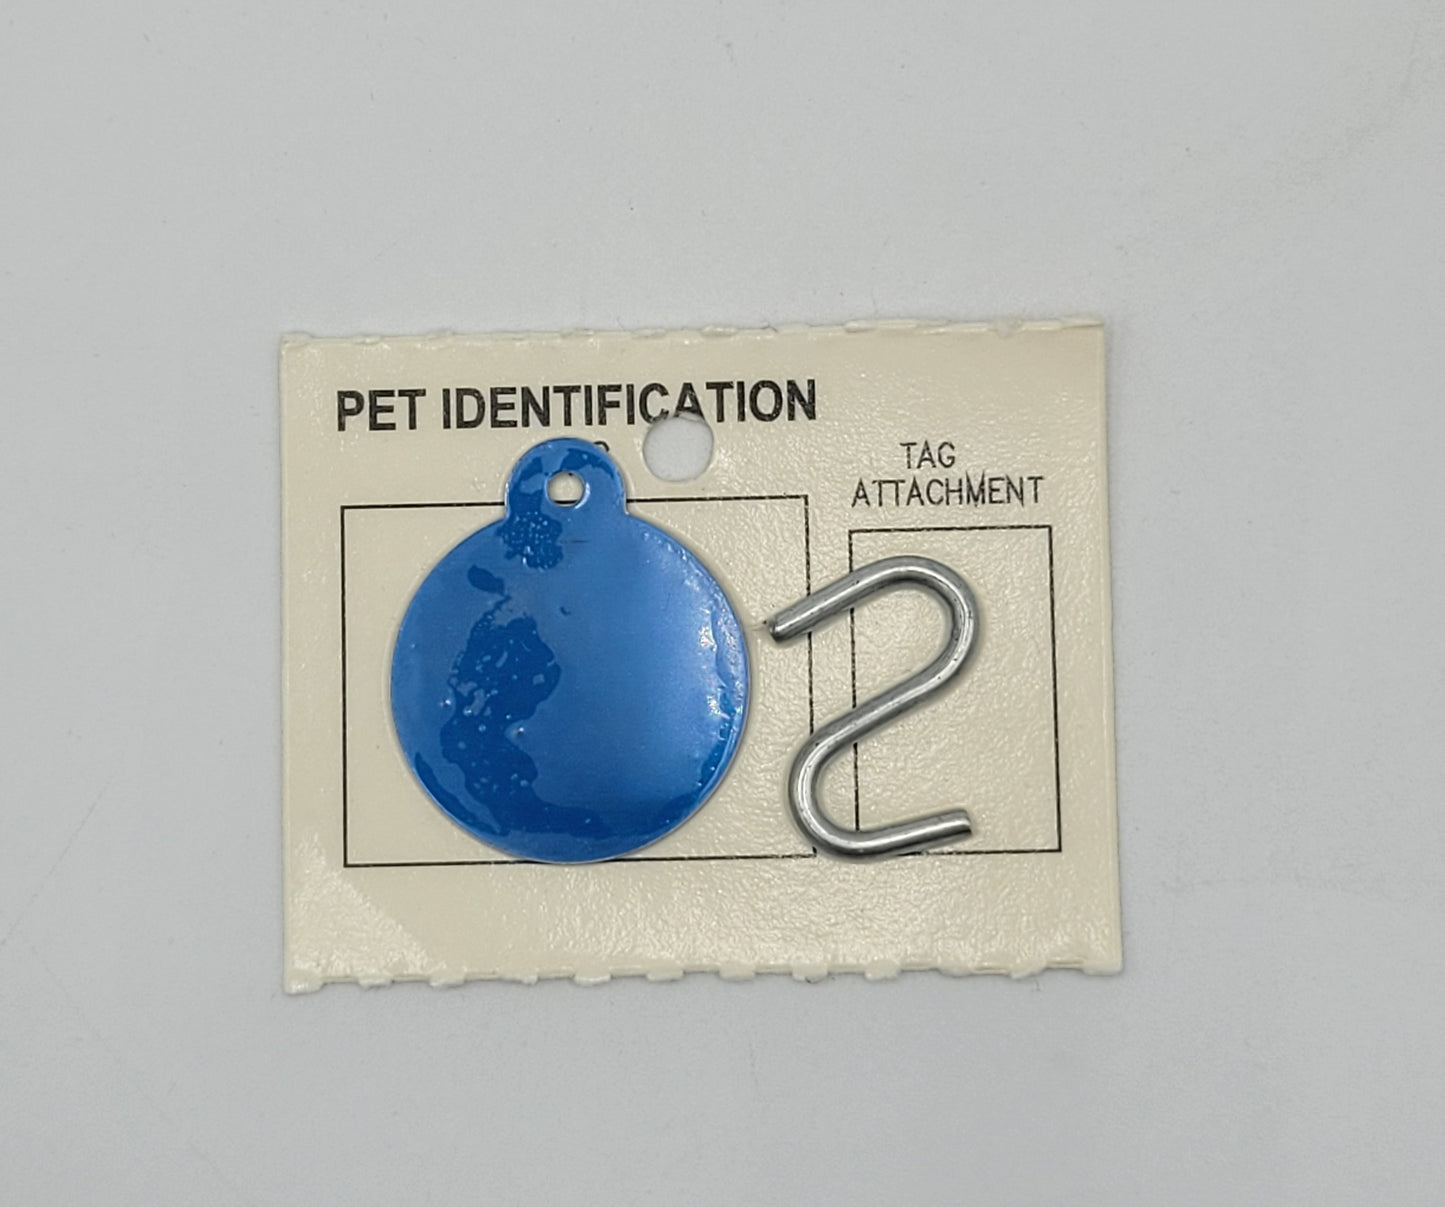 Pet Identification Tag